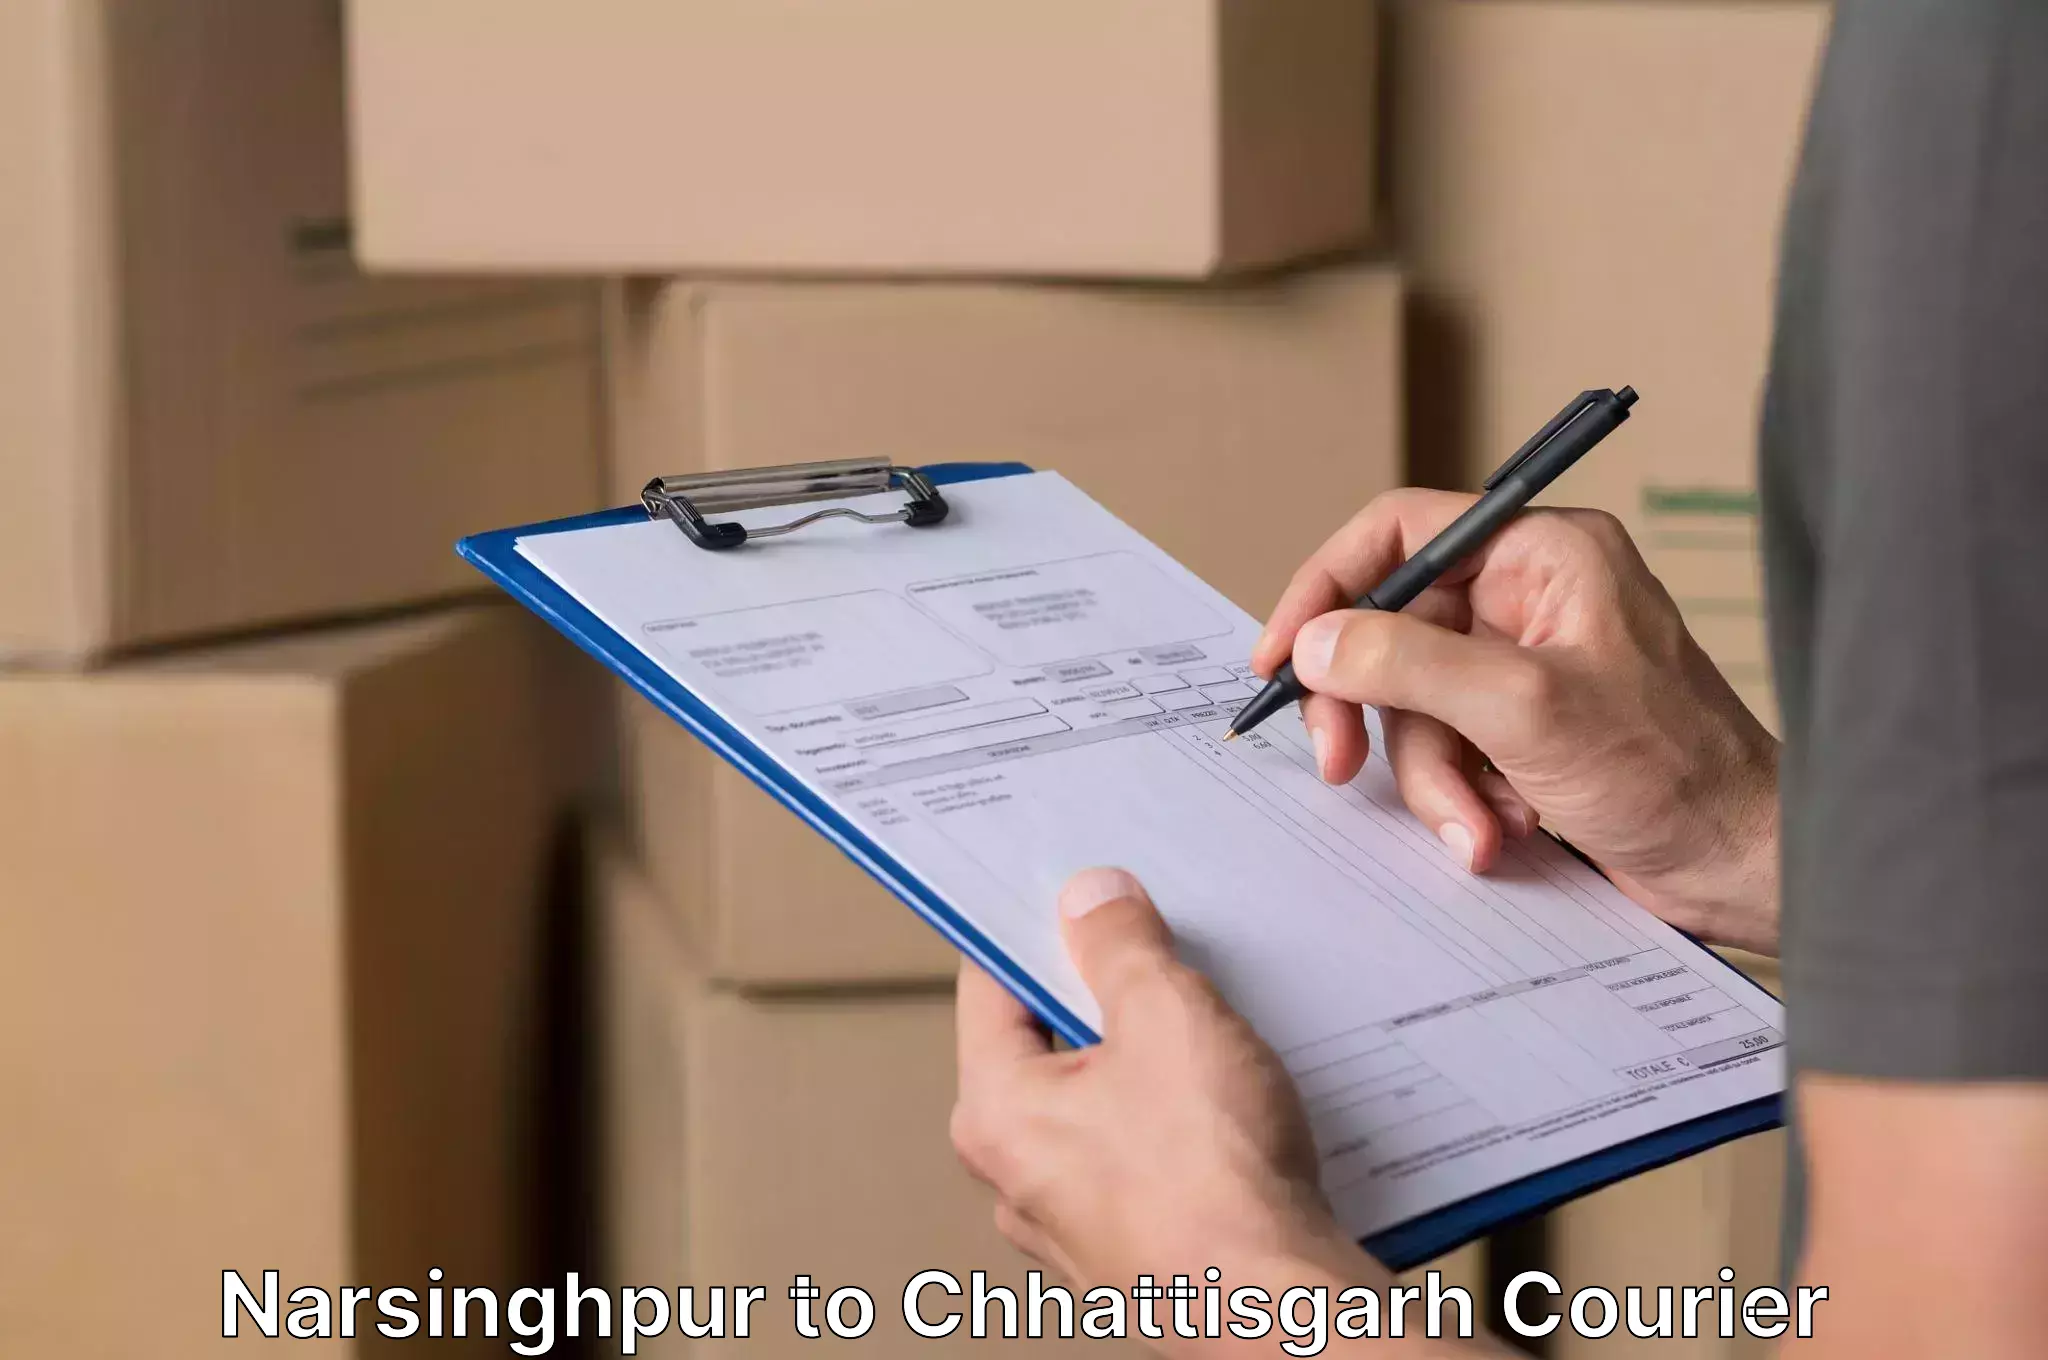 Furniture delivery service Narsinghpur to Pandariya